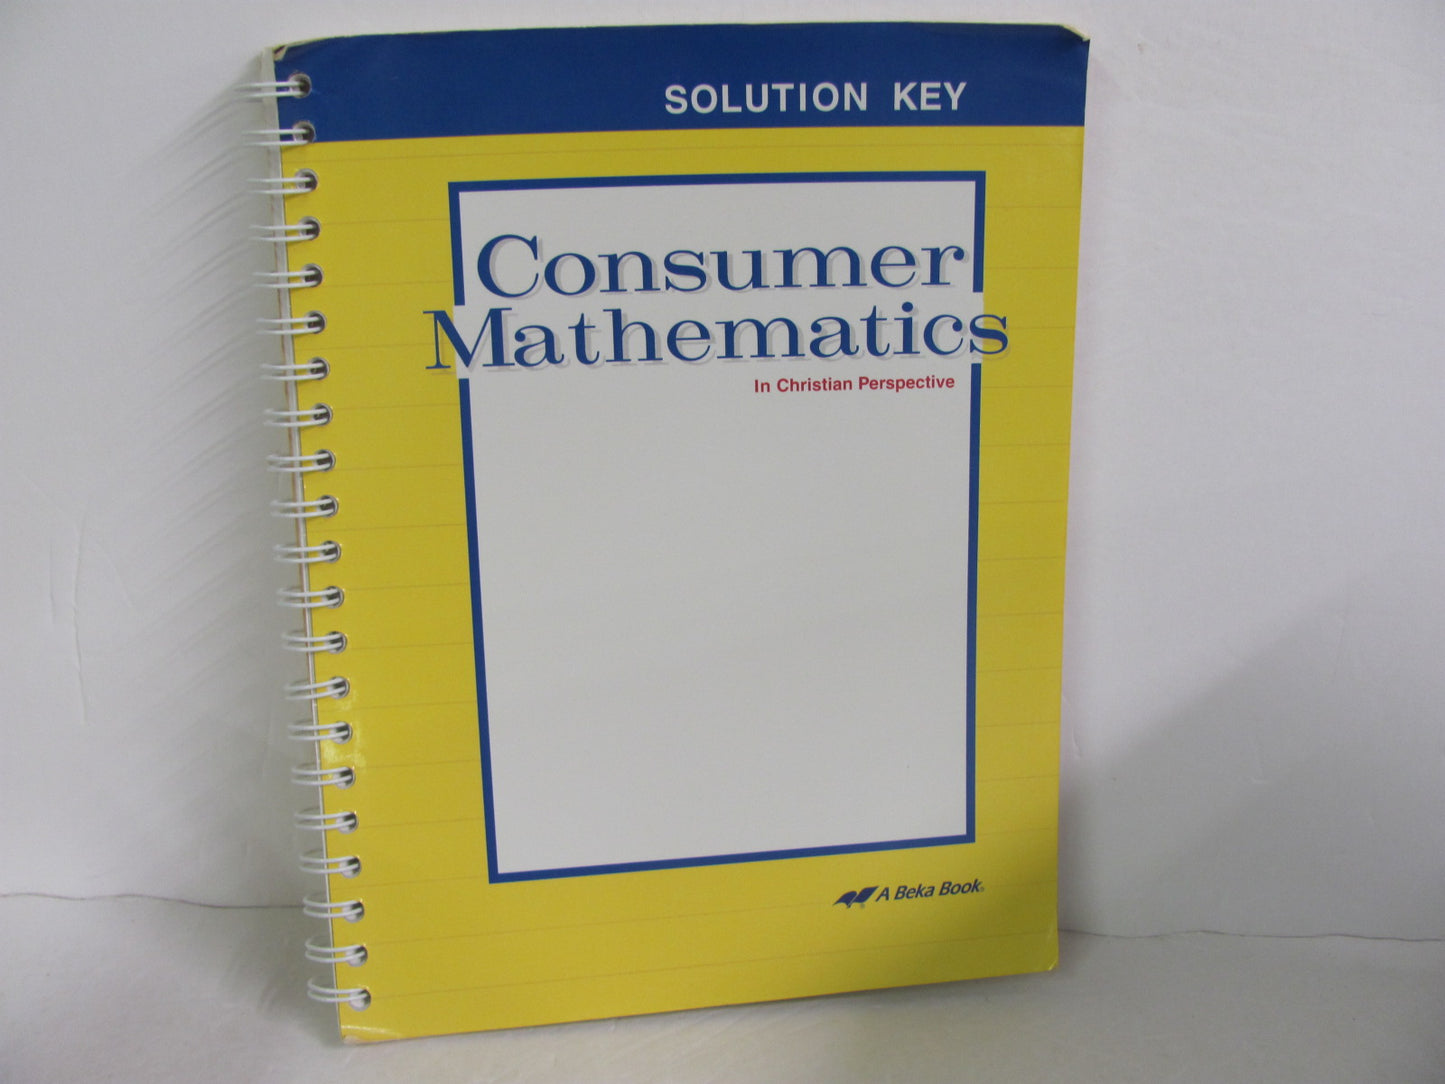 Consumer Mathematics Abeka Solution Key Pre-Owned Mathematics Textbooks